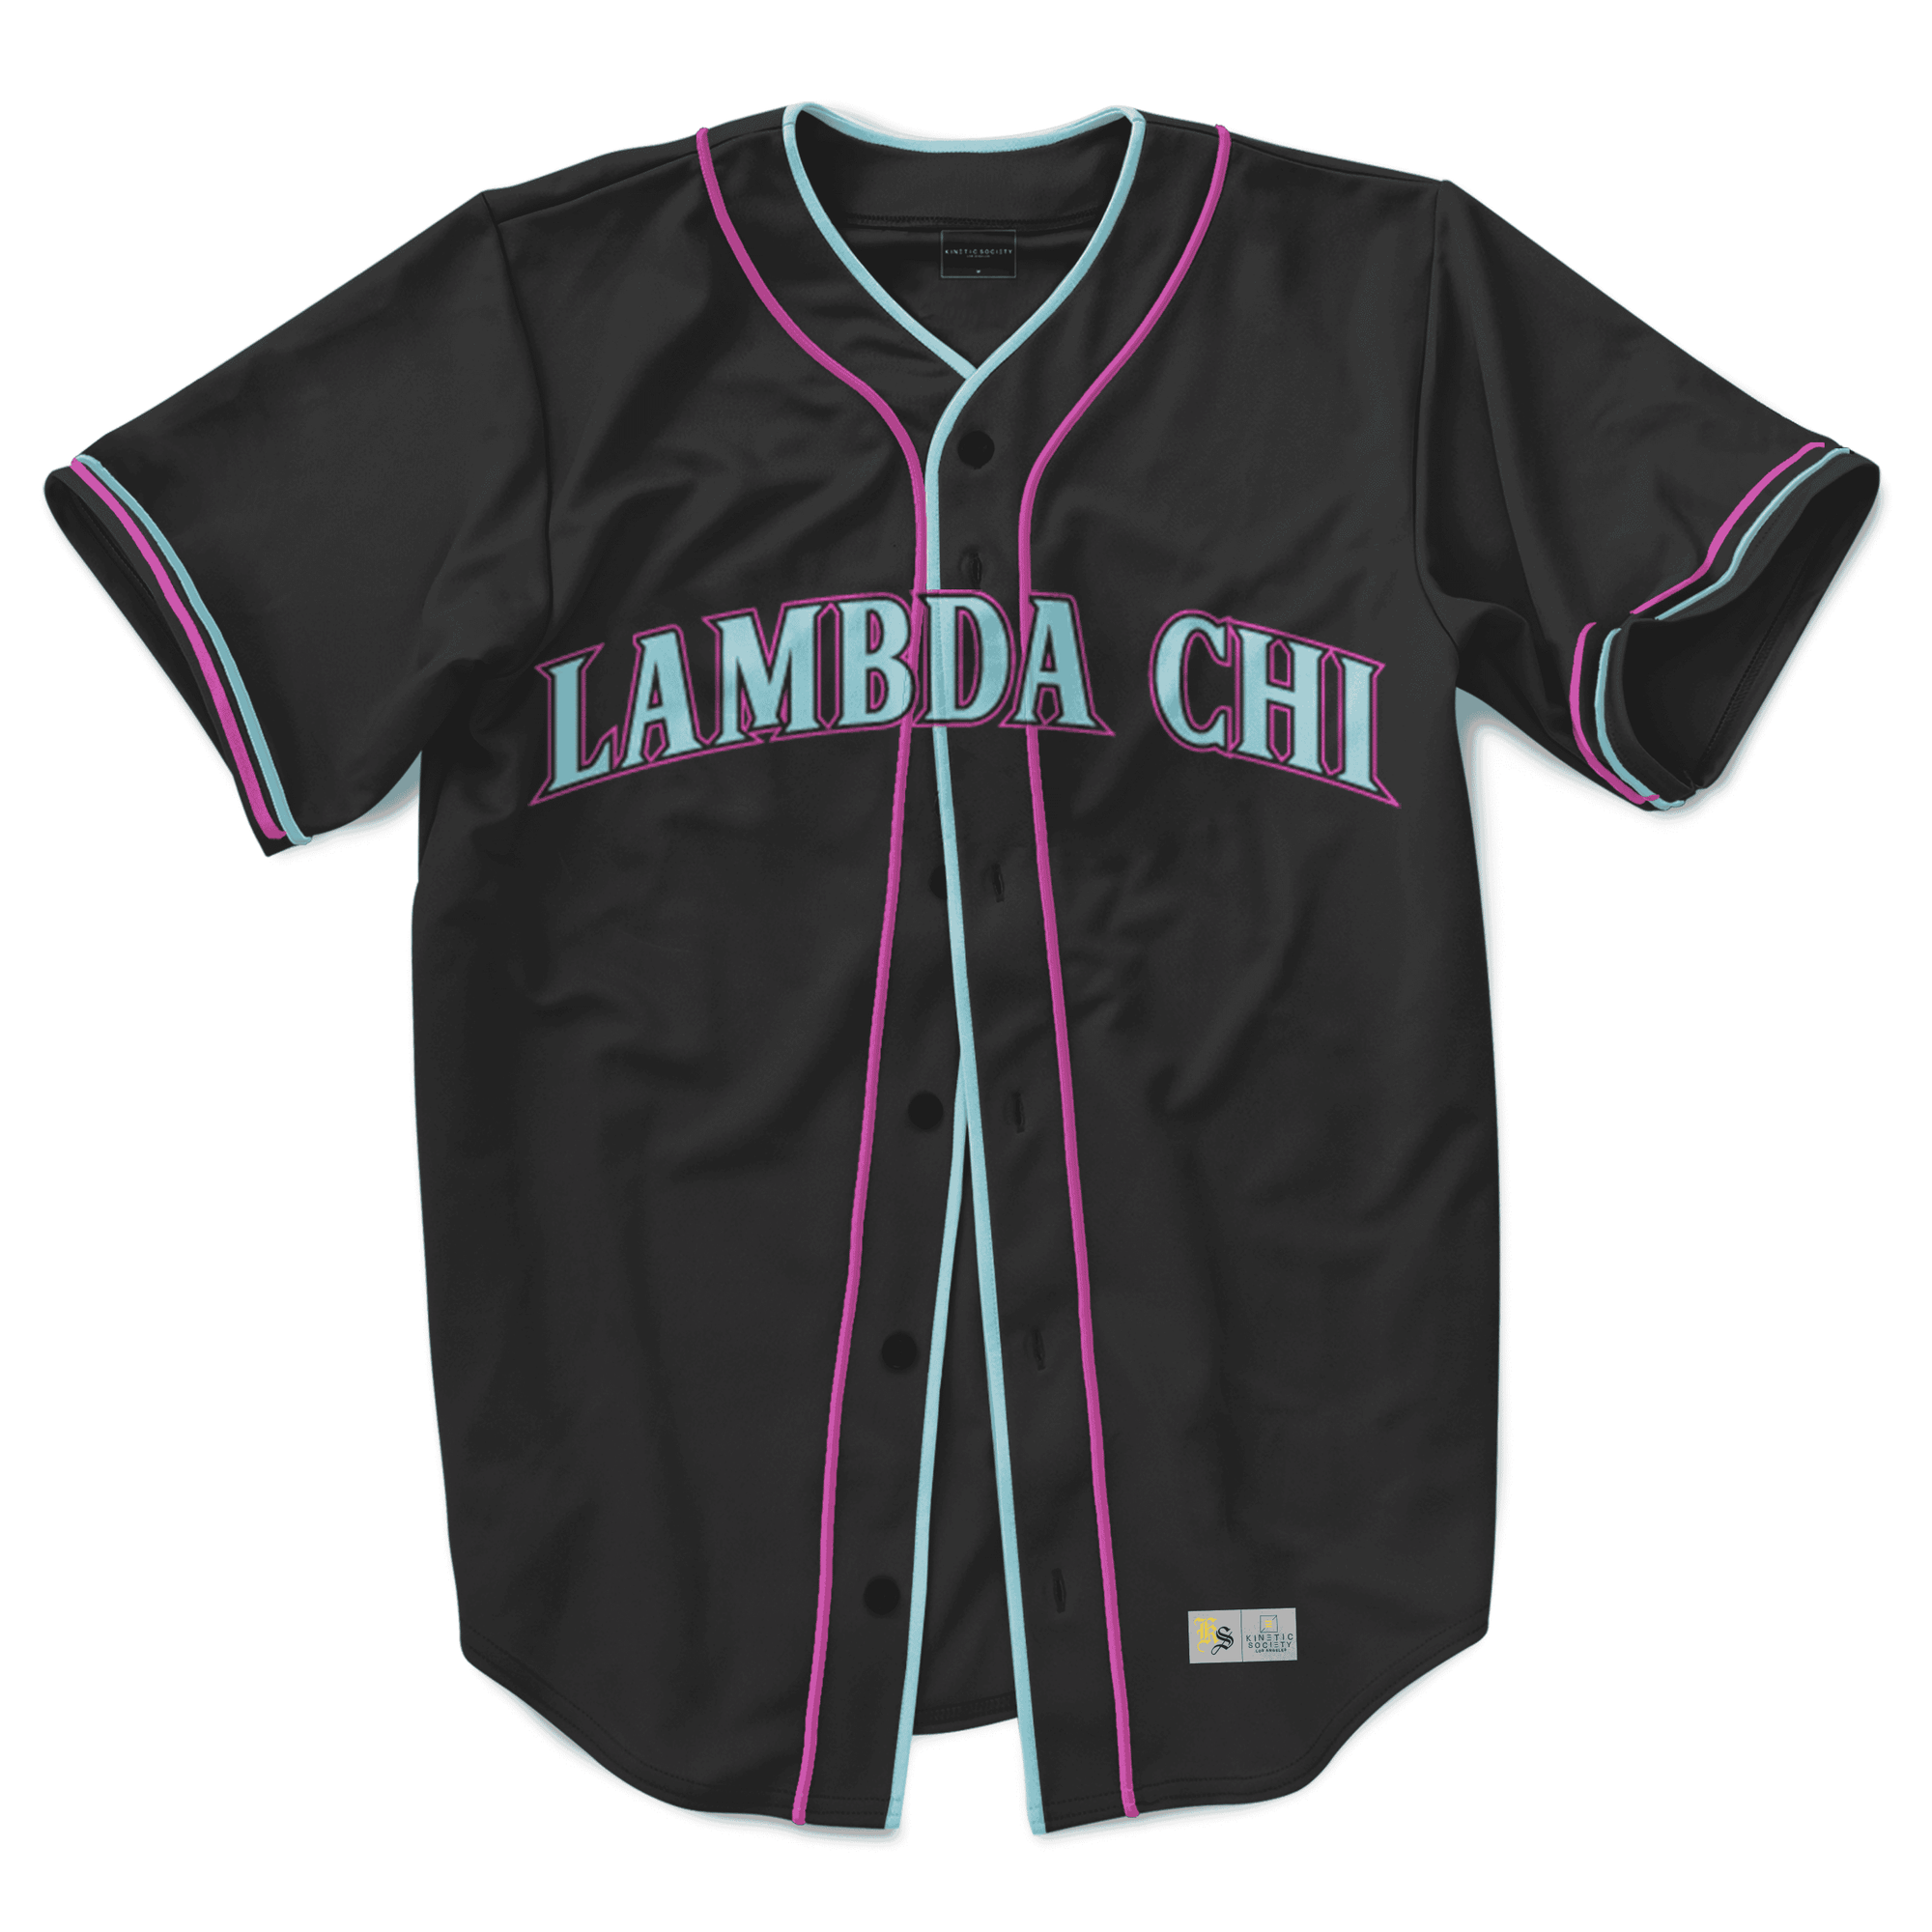 Lambda Chi Alpha - Neo Nightlife Baseball Jersey